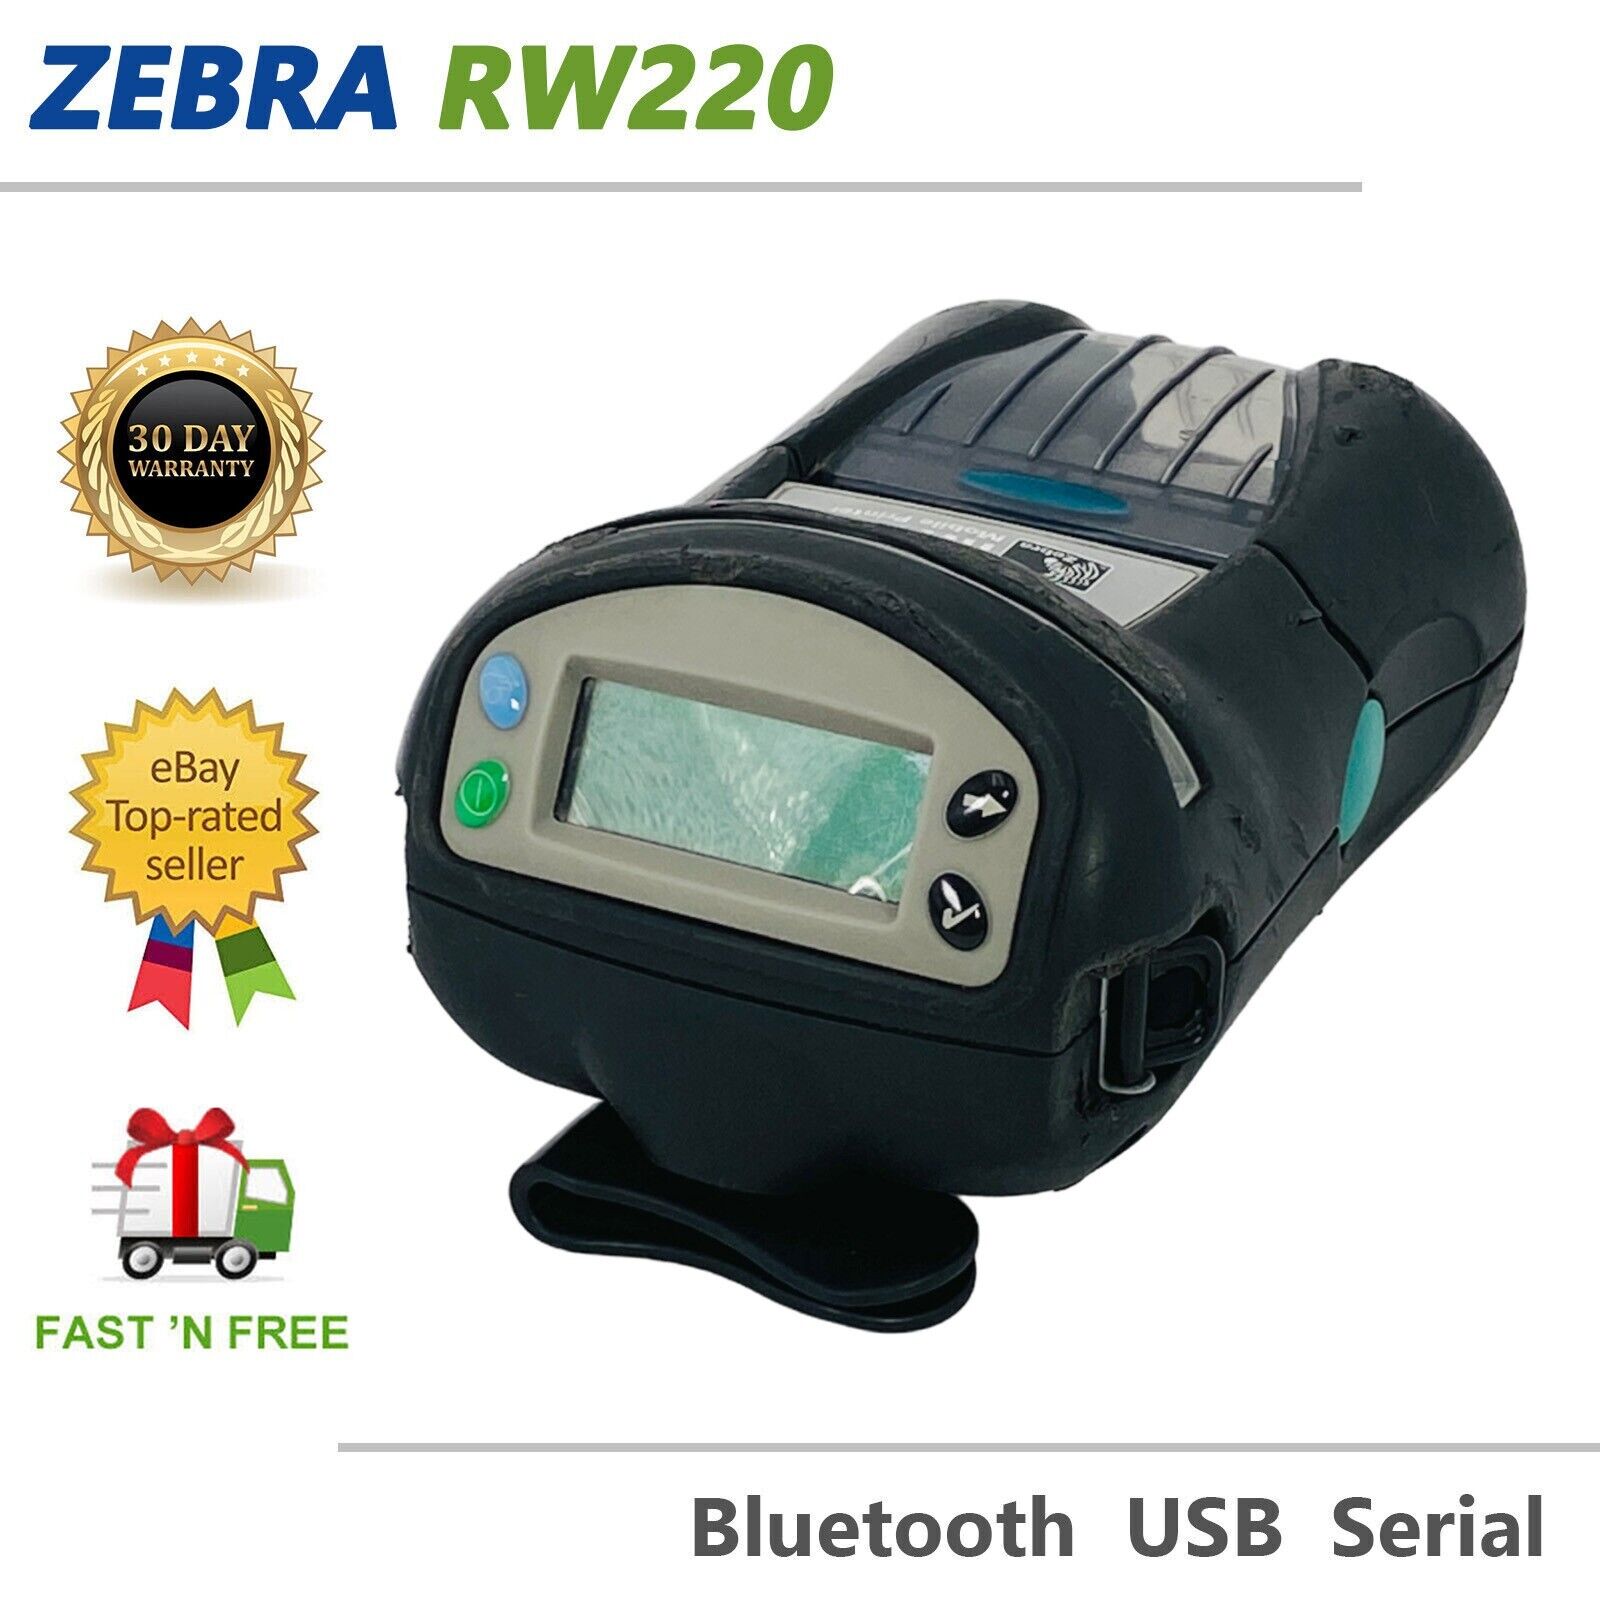 Zebra RW220 Thermal Mobile Label Printer Card Reader BT USB Serial NO Charger